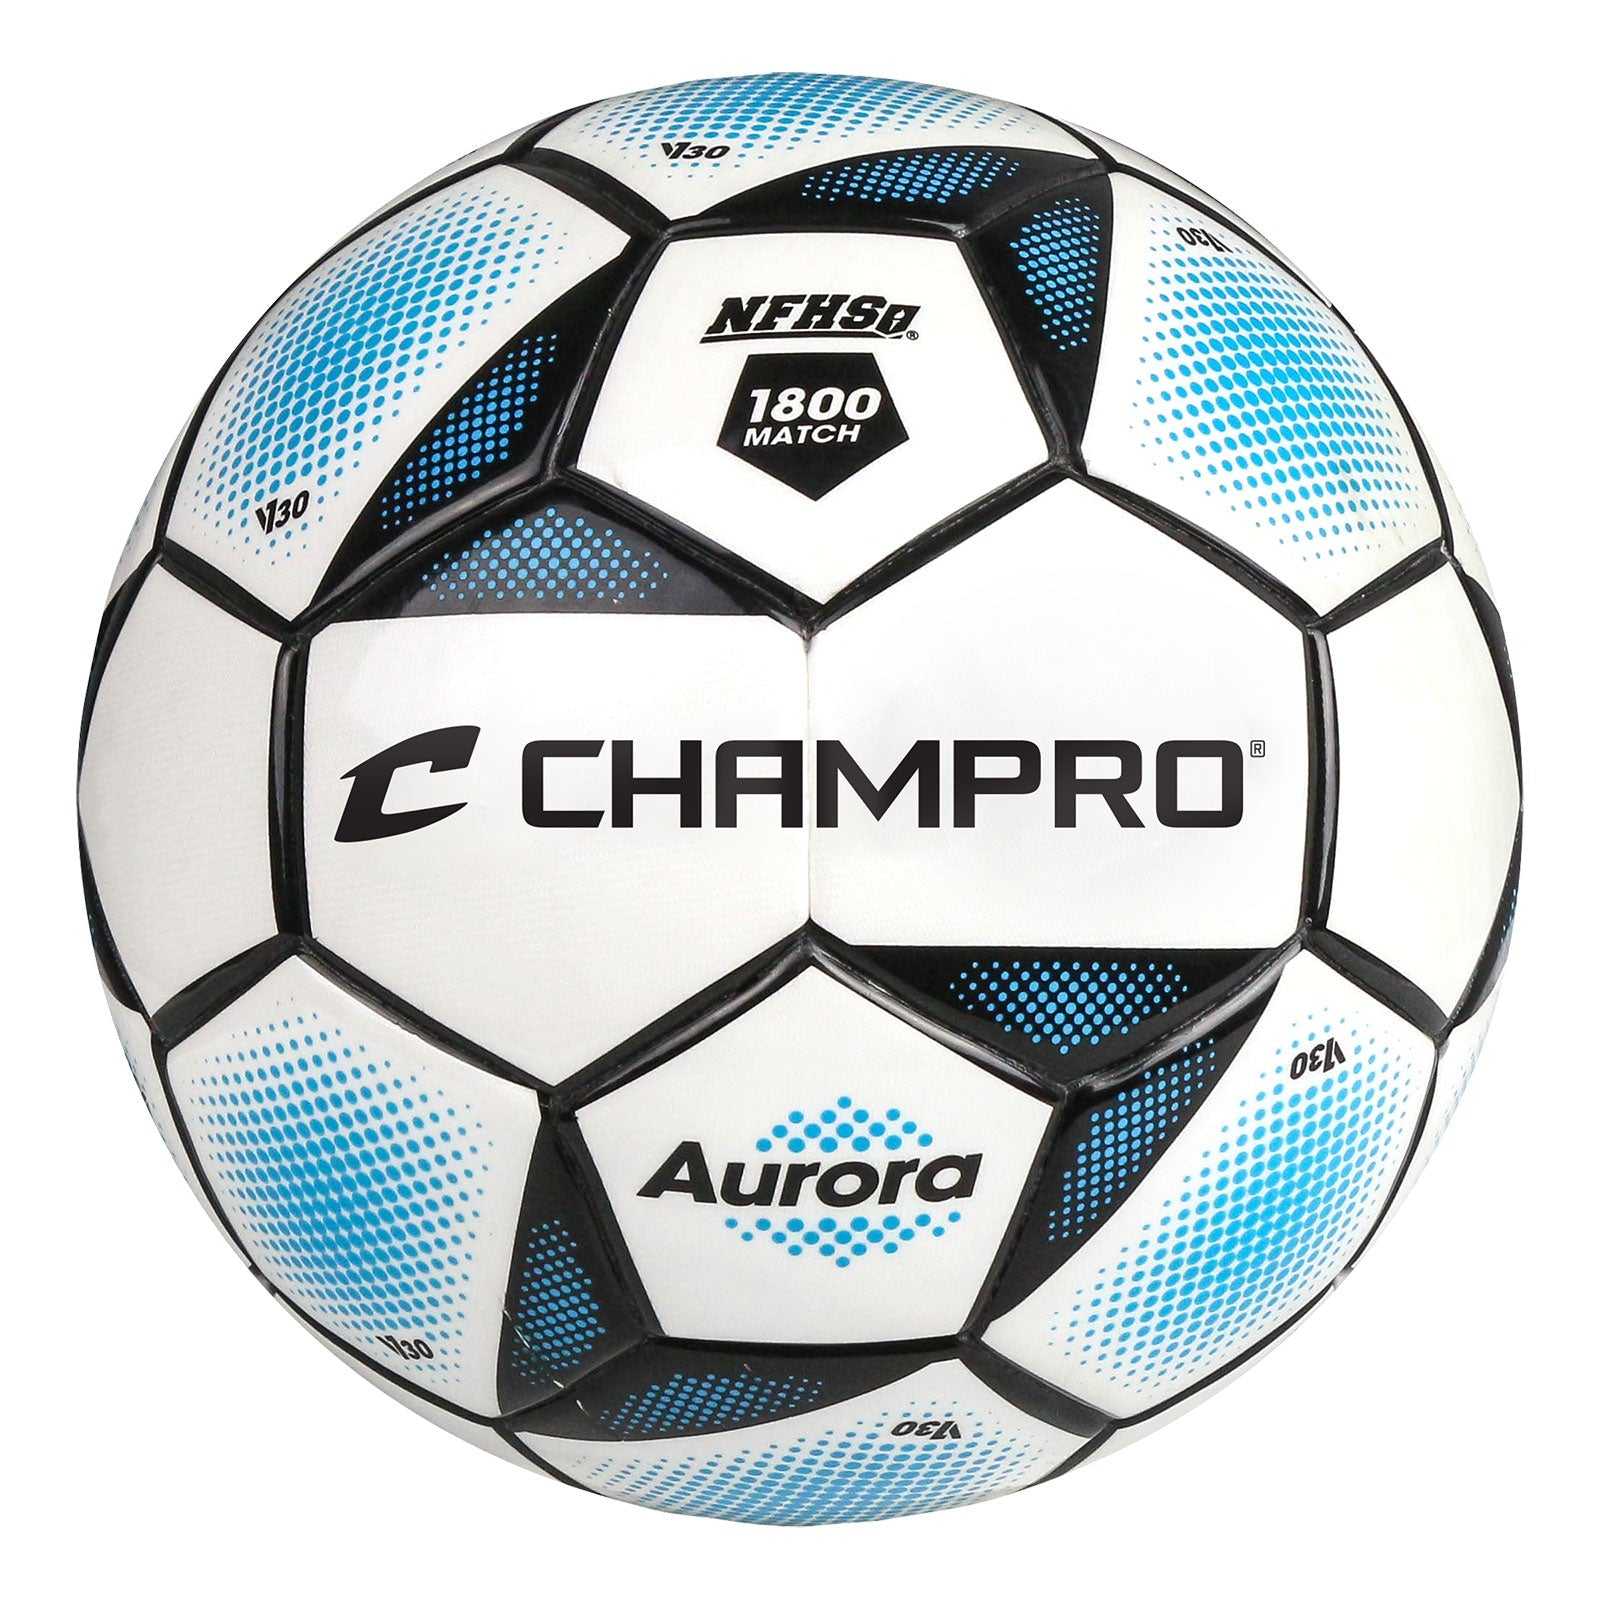 Champro SB1800 Aurora Thermal Bonded Soccer Ball "1800" - Black Optic Orange - HIT a Double